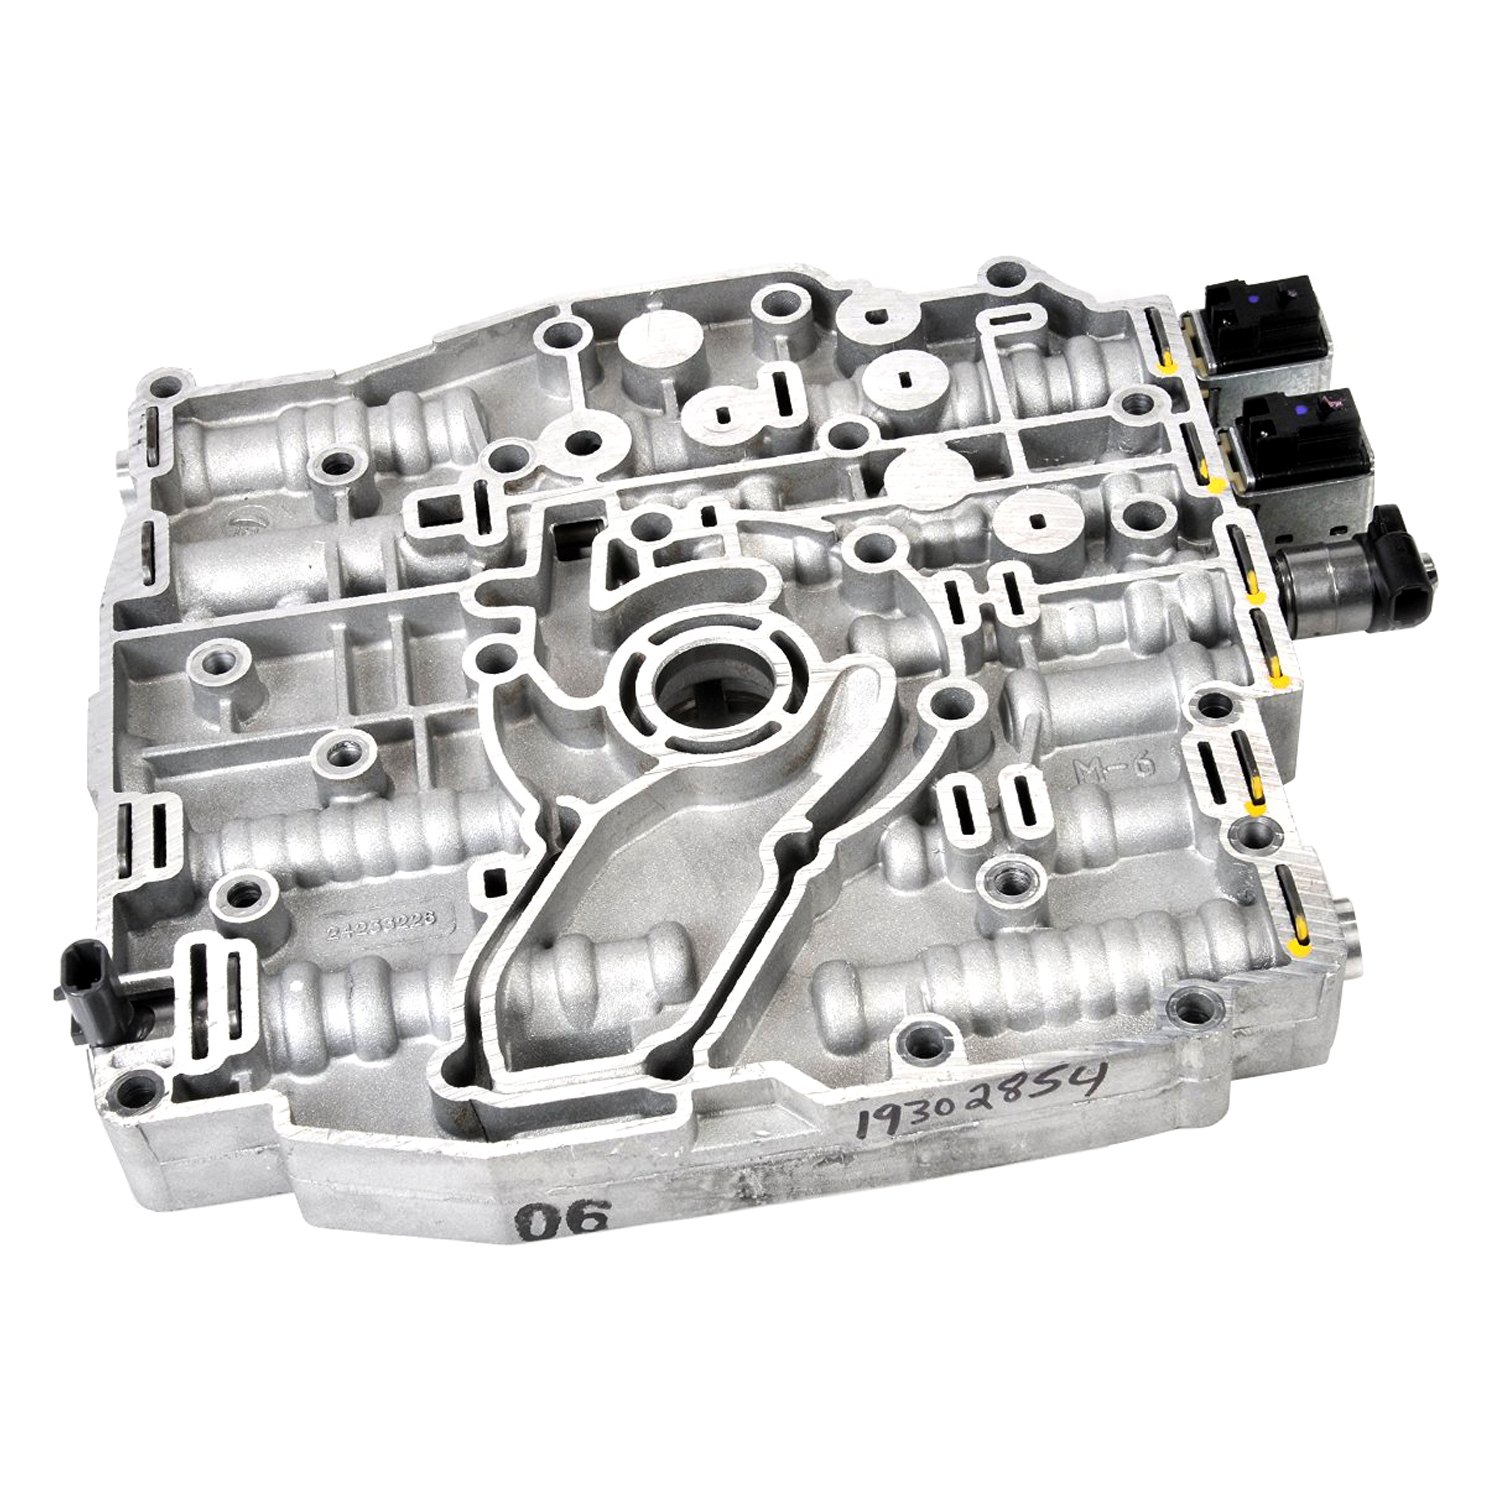 U341e transmission valve body manual template